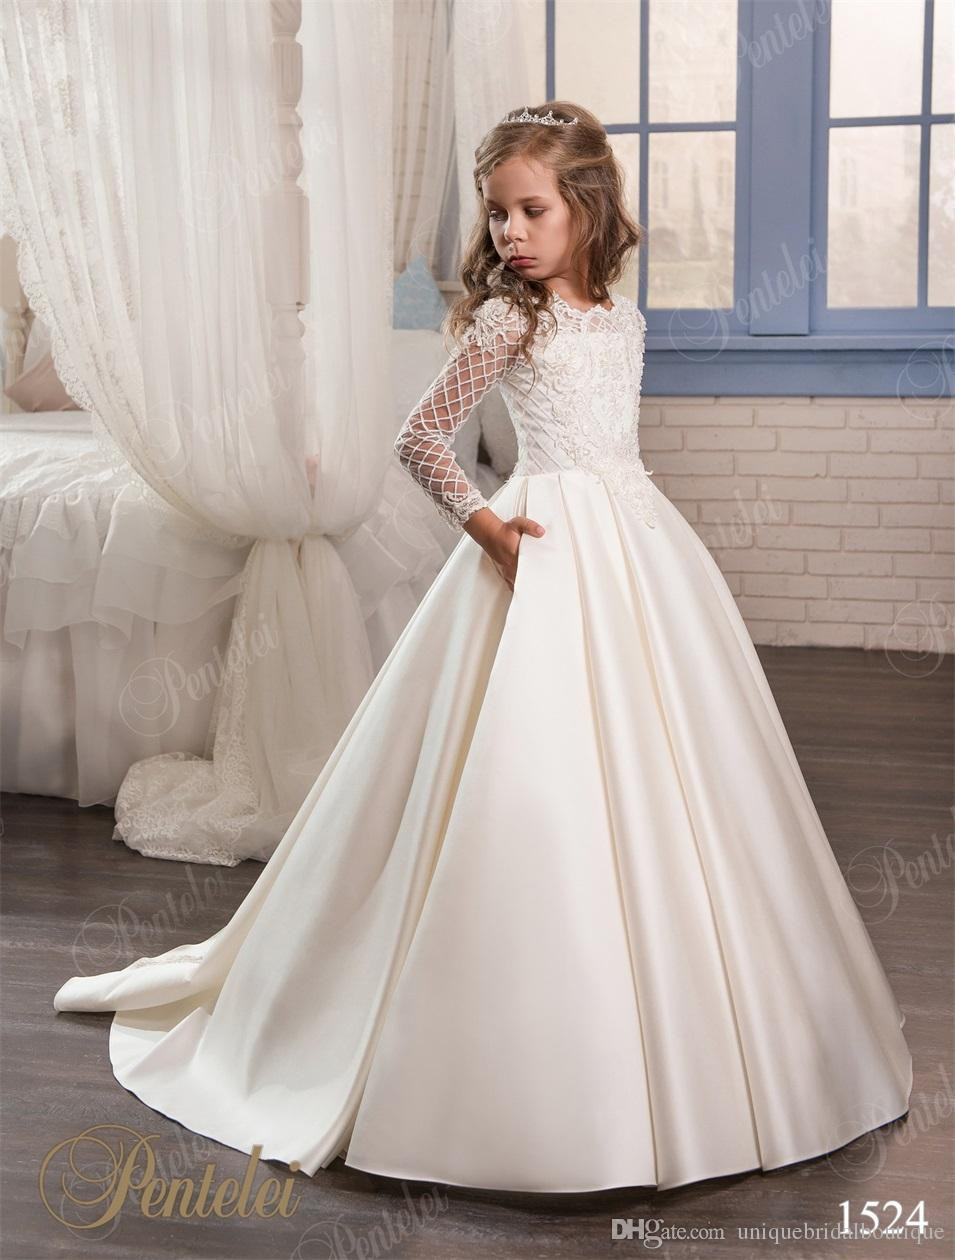 Little Girl Wedding Dresses
 Wedding Dresses For Little Girls 2017 Pentelei Cheap With